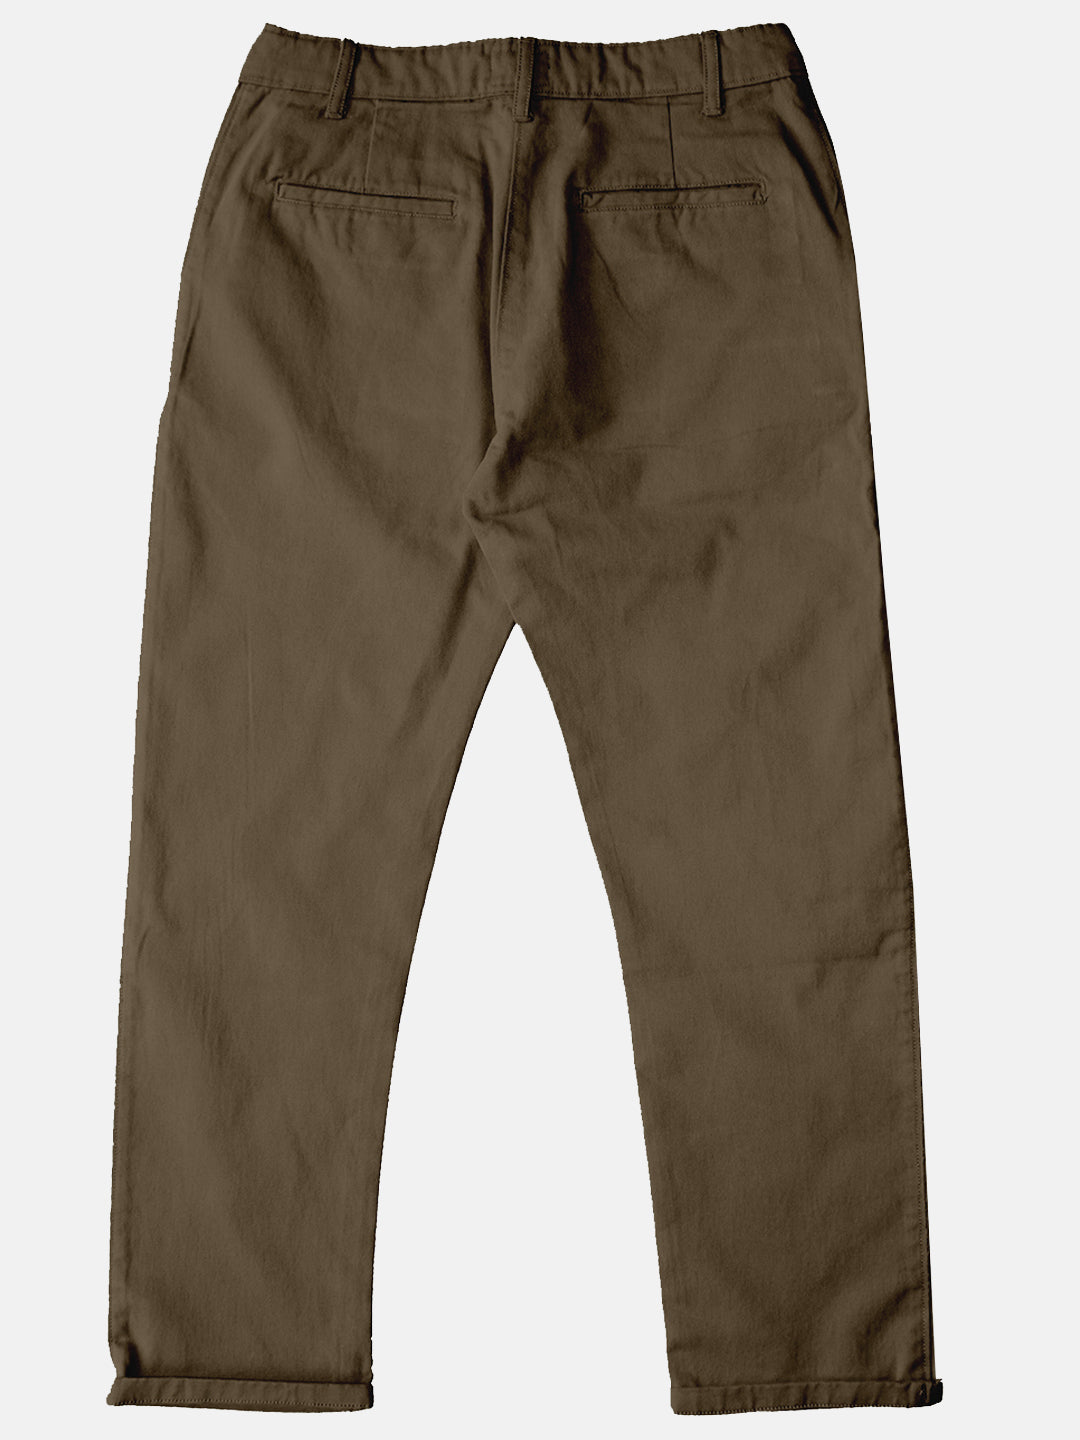 Black Squard Boys Casual Wear 3/4 Pant Capri Set (5 Pcs Pack) at Best Price  in Tirupur | Msp Knit Garments Pvt Ltd